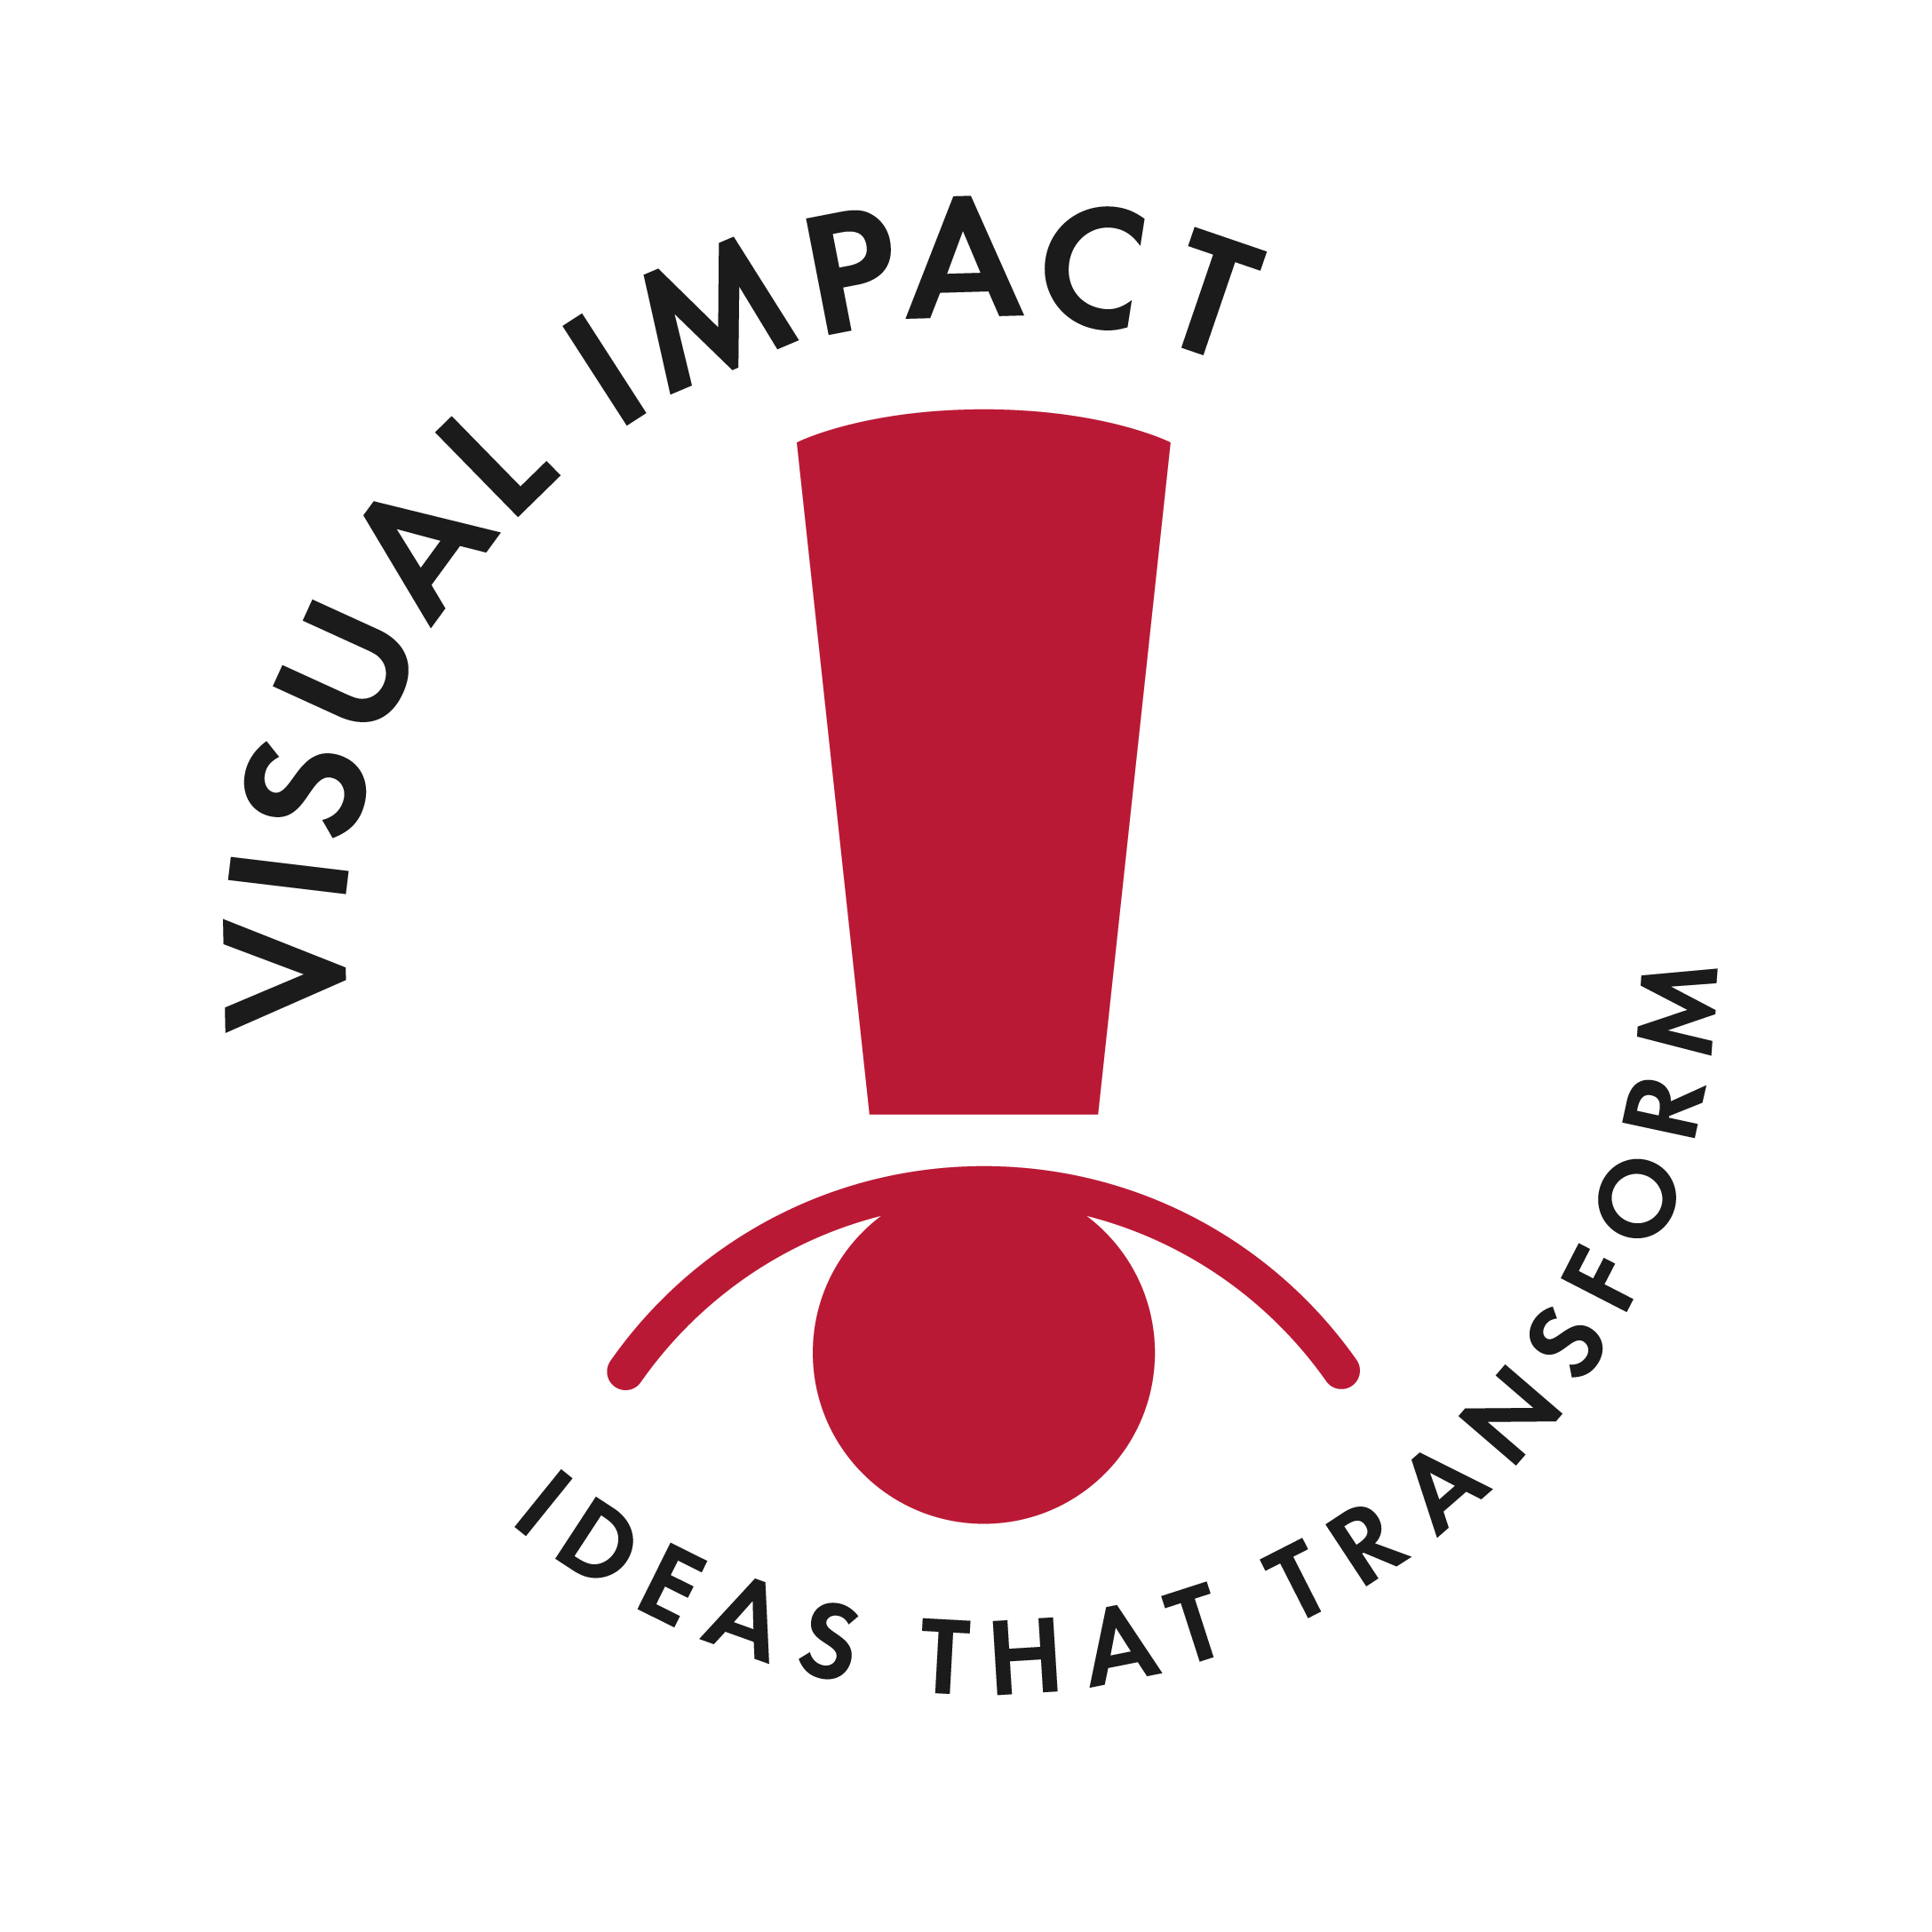 Impact systems. Visual Impact. Visual Impact in advertising. Apacr.